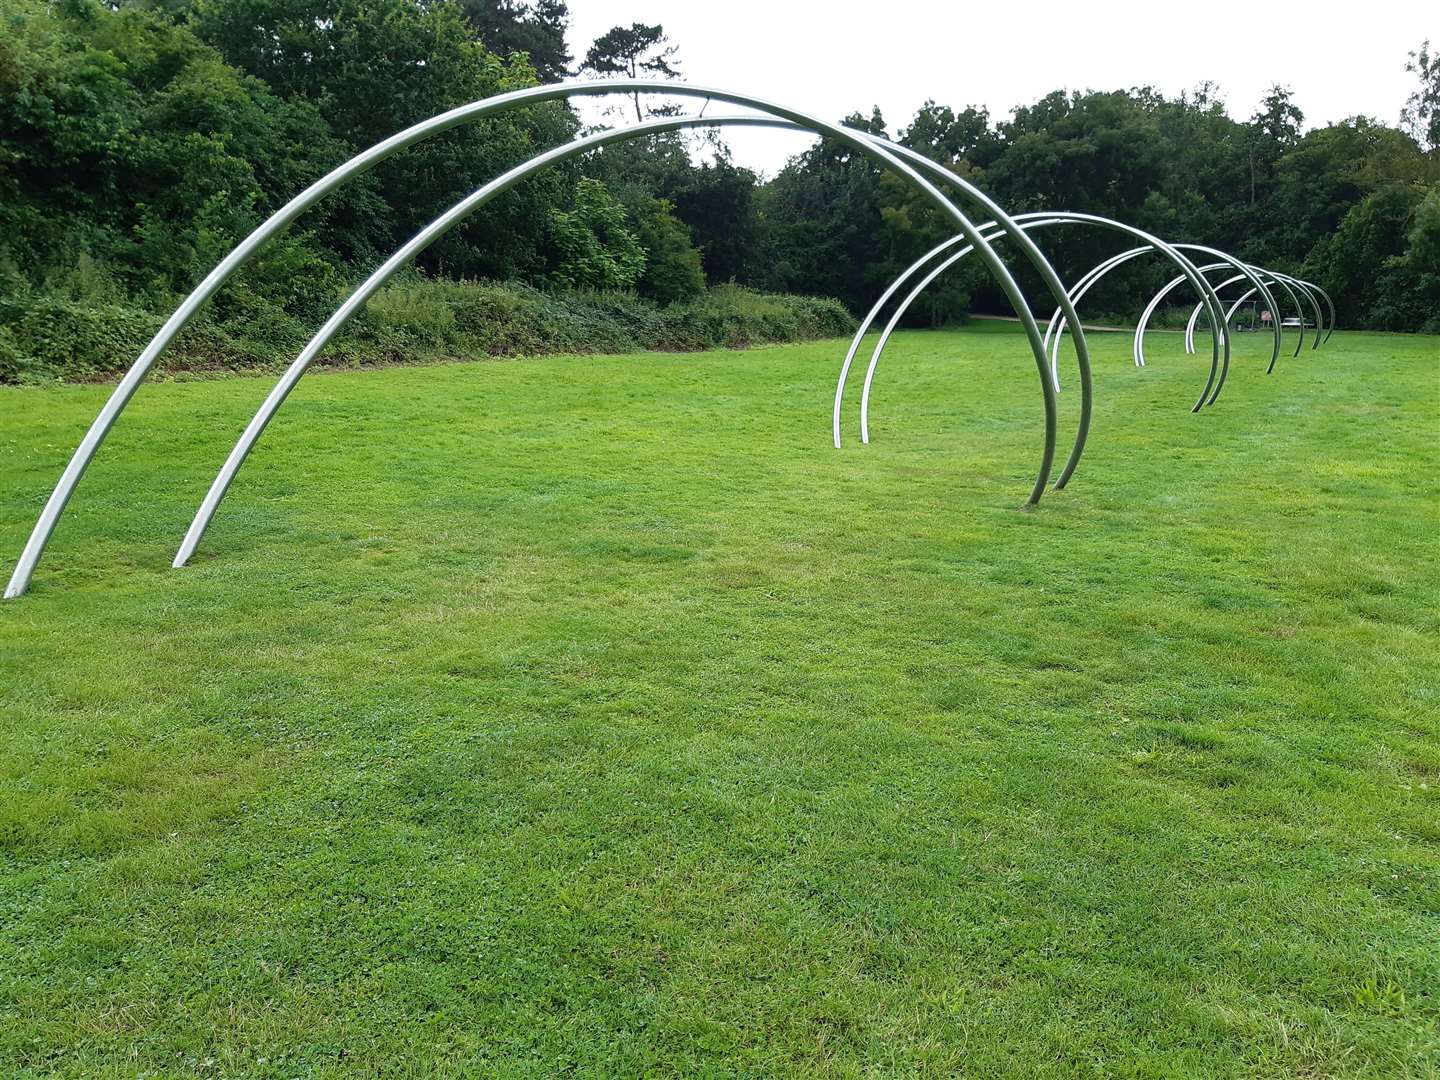 The DNA helix, Whatman Park, Maidstone